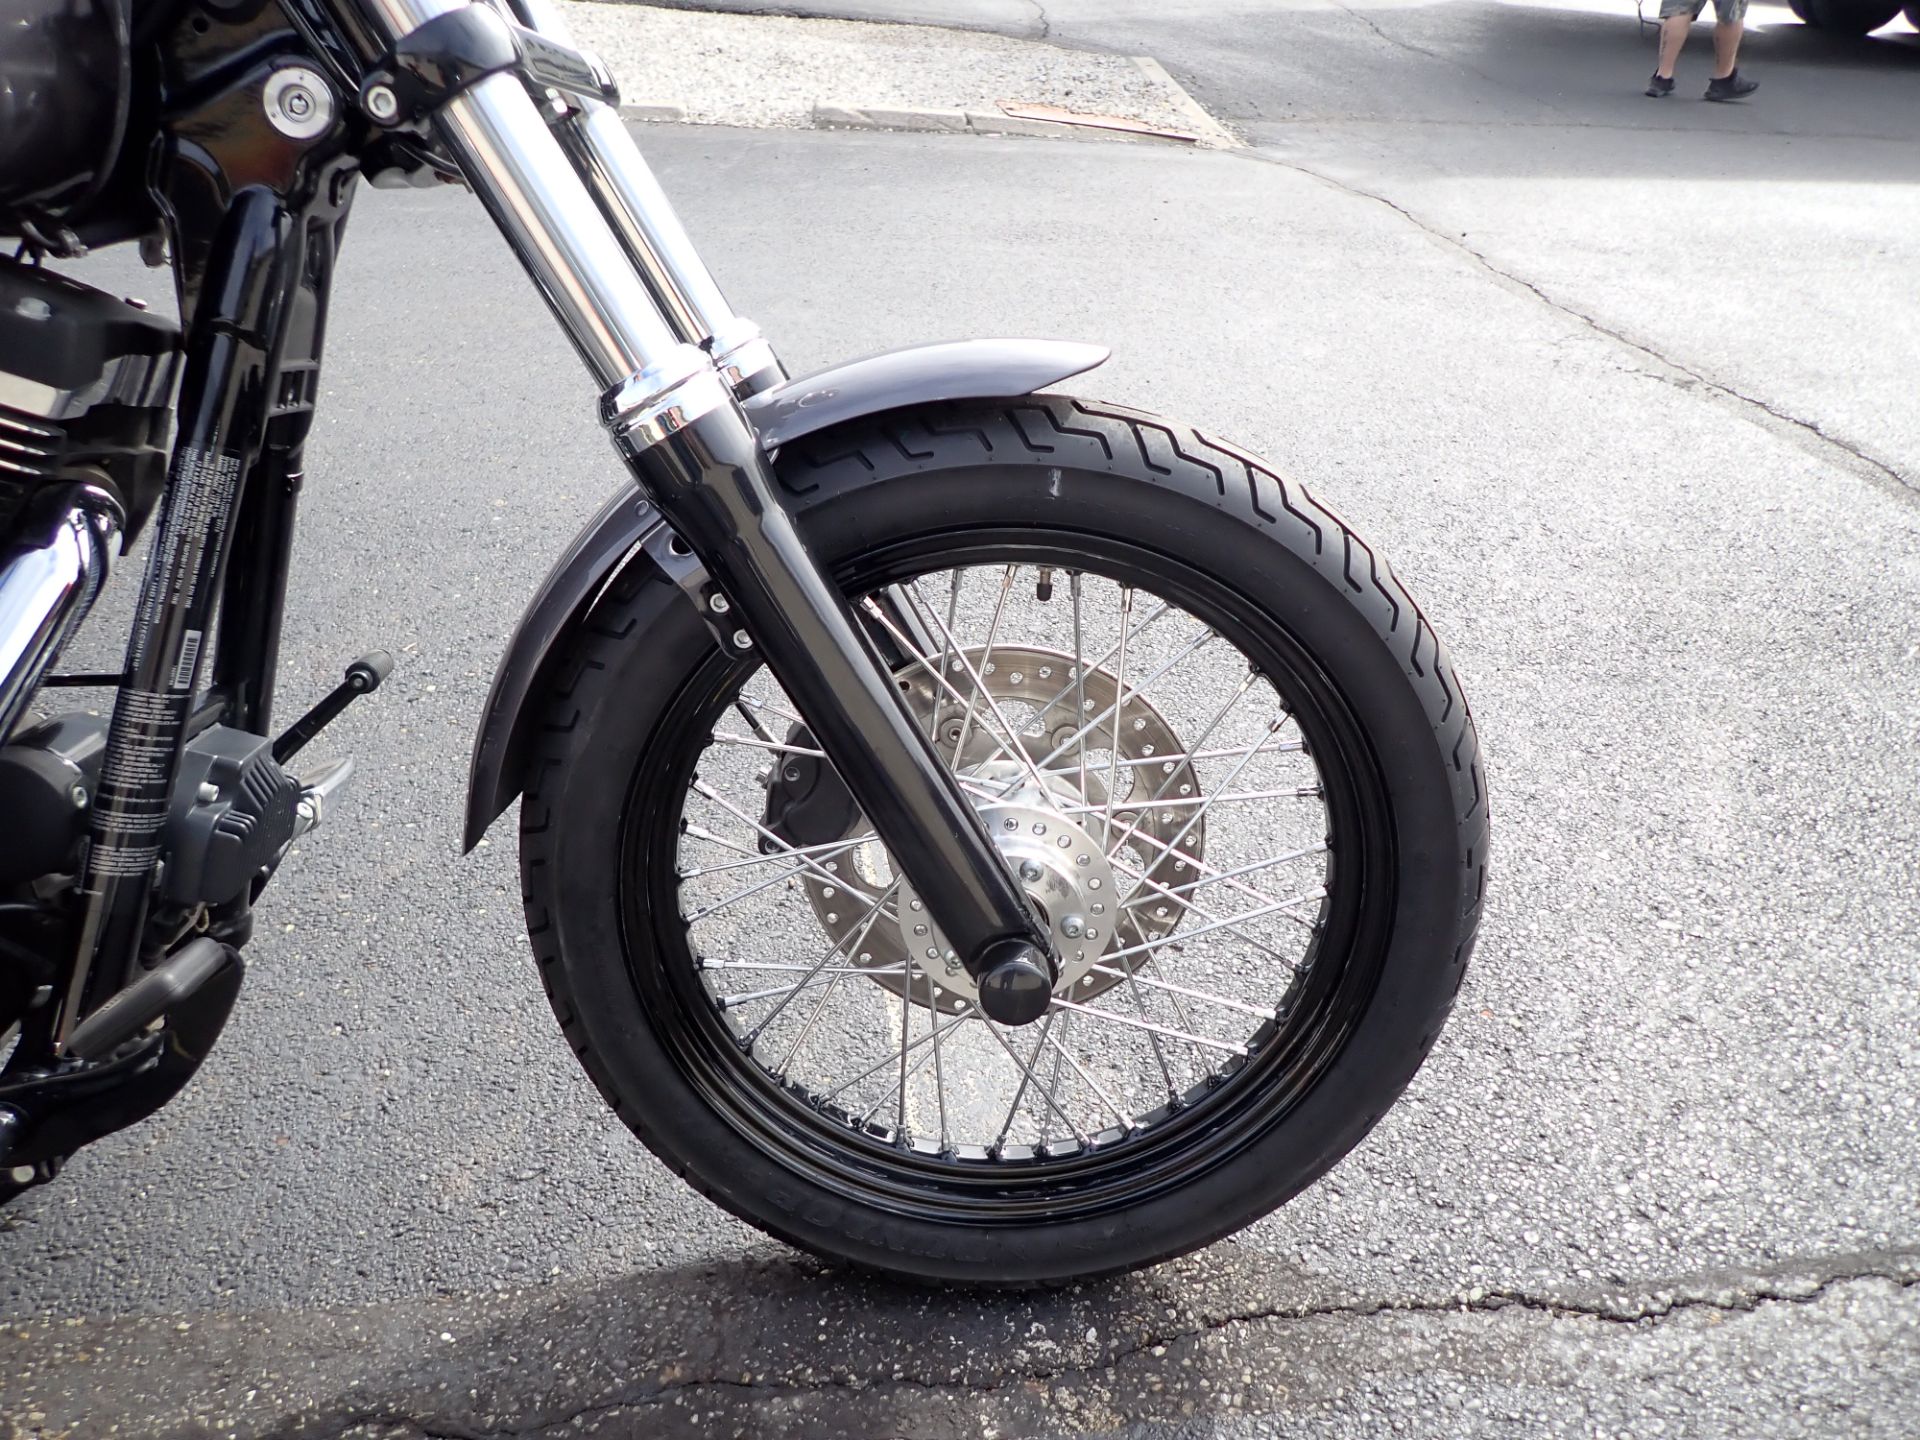 2014 Harley-Davidson Dyna® Street Bob® in Massillon, Ohio - Photo 2